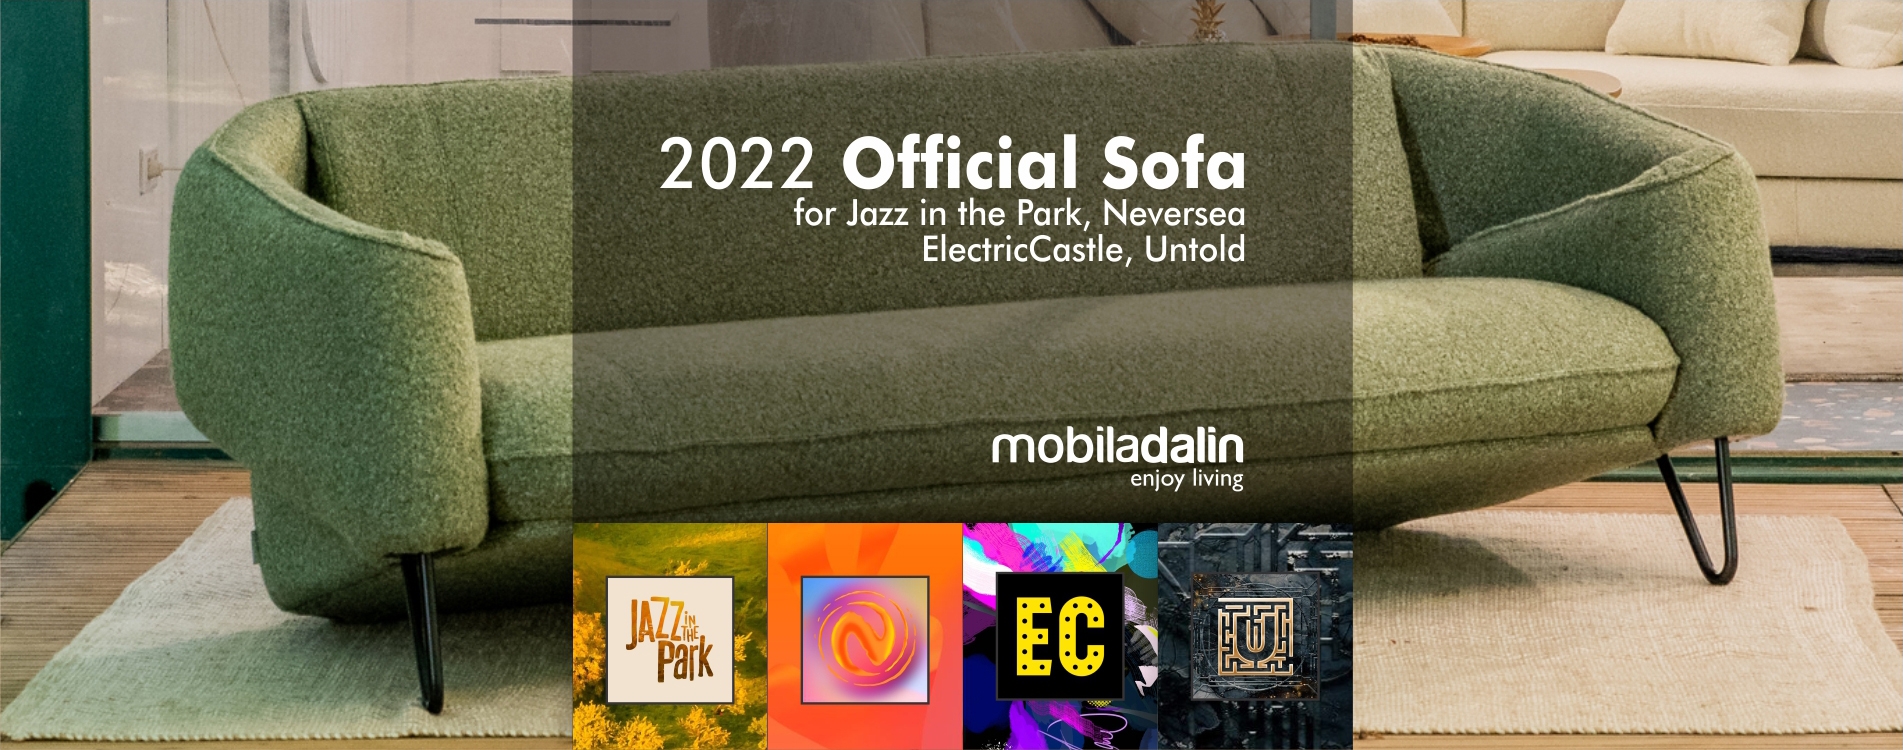 2022 Official Sofa